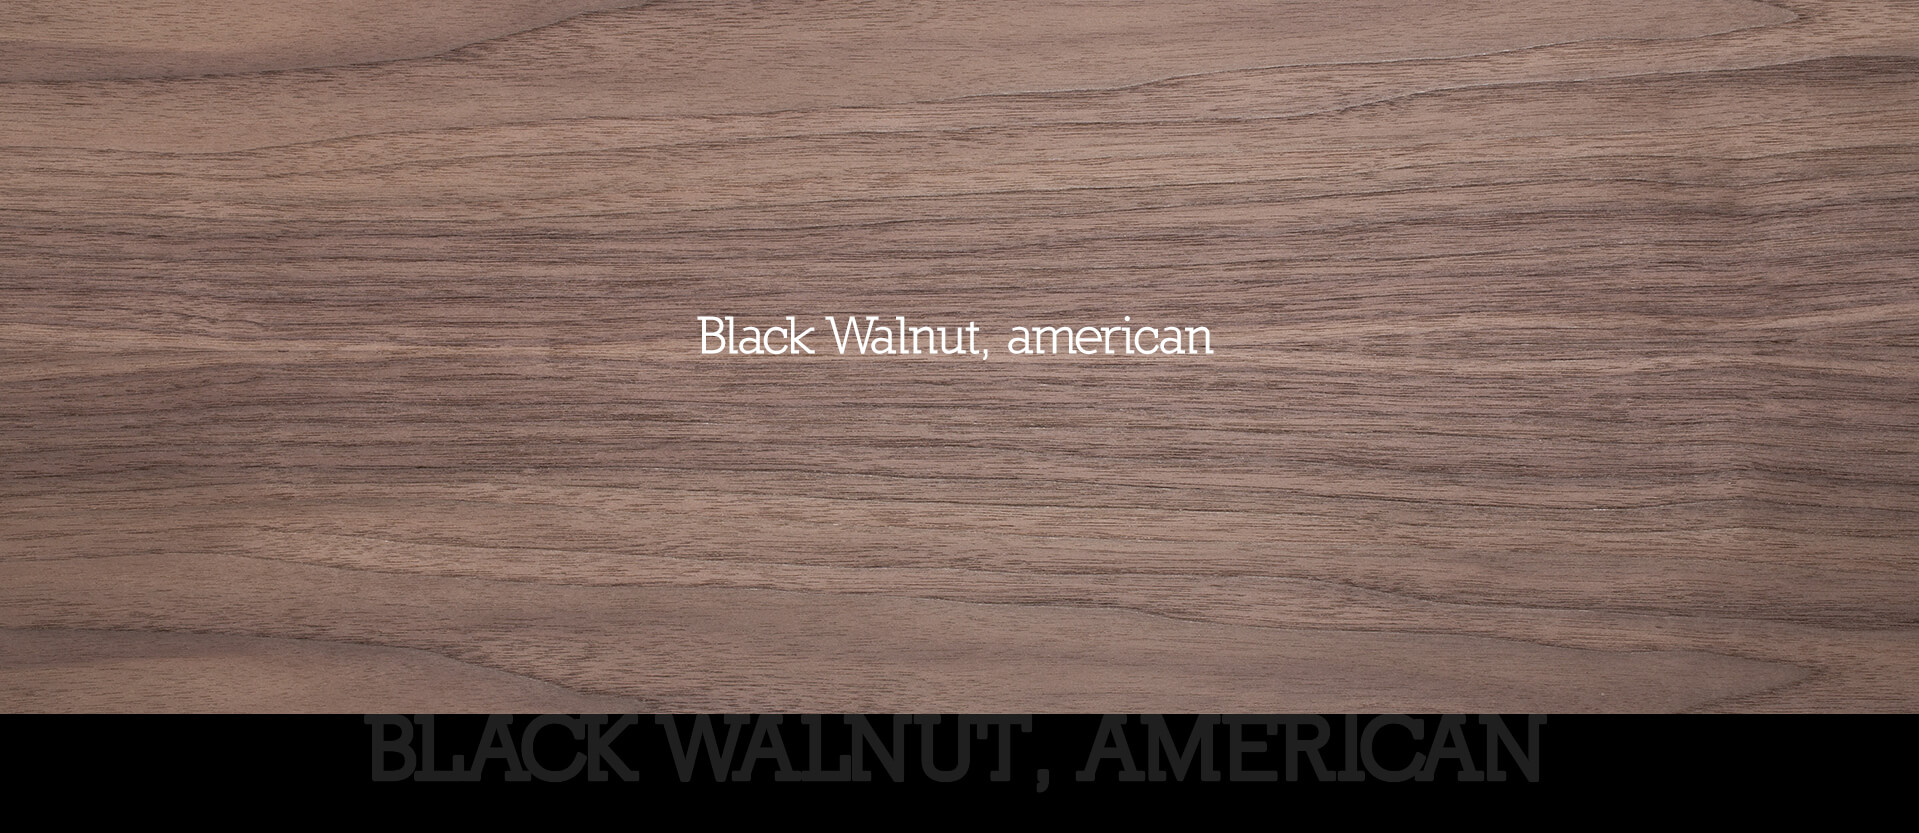 10 Black Walnut american